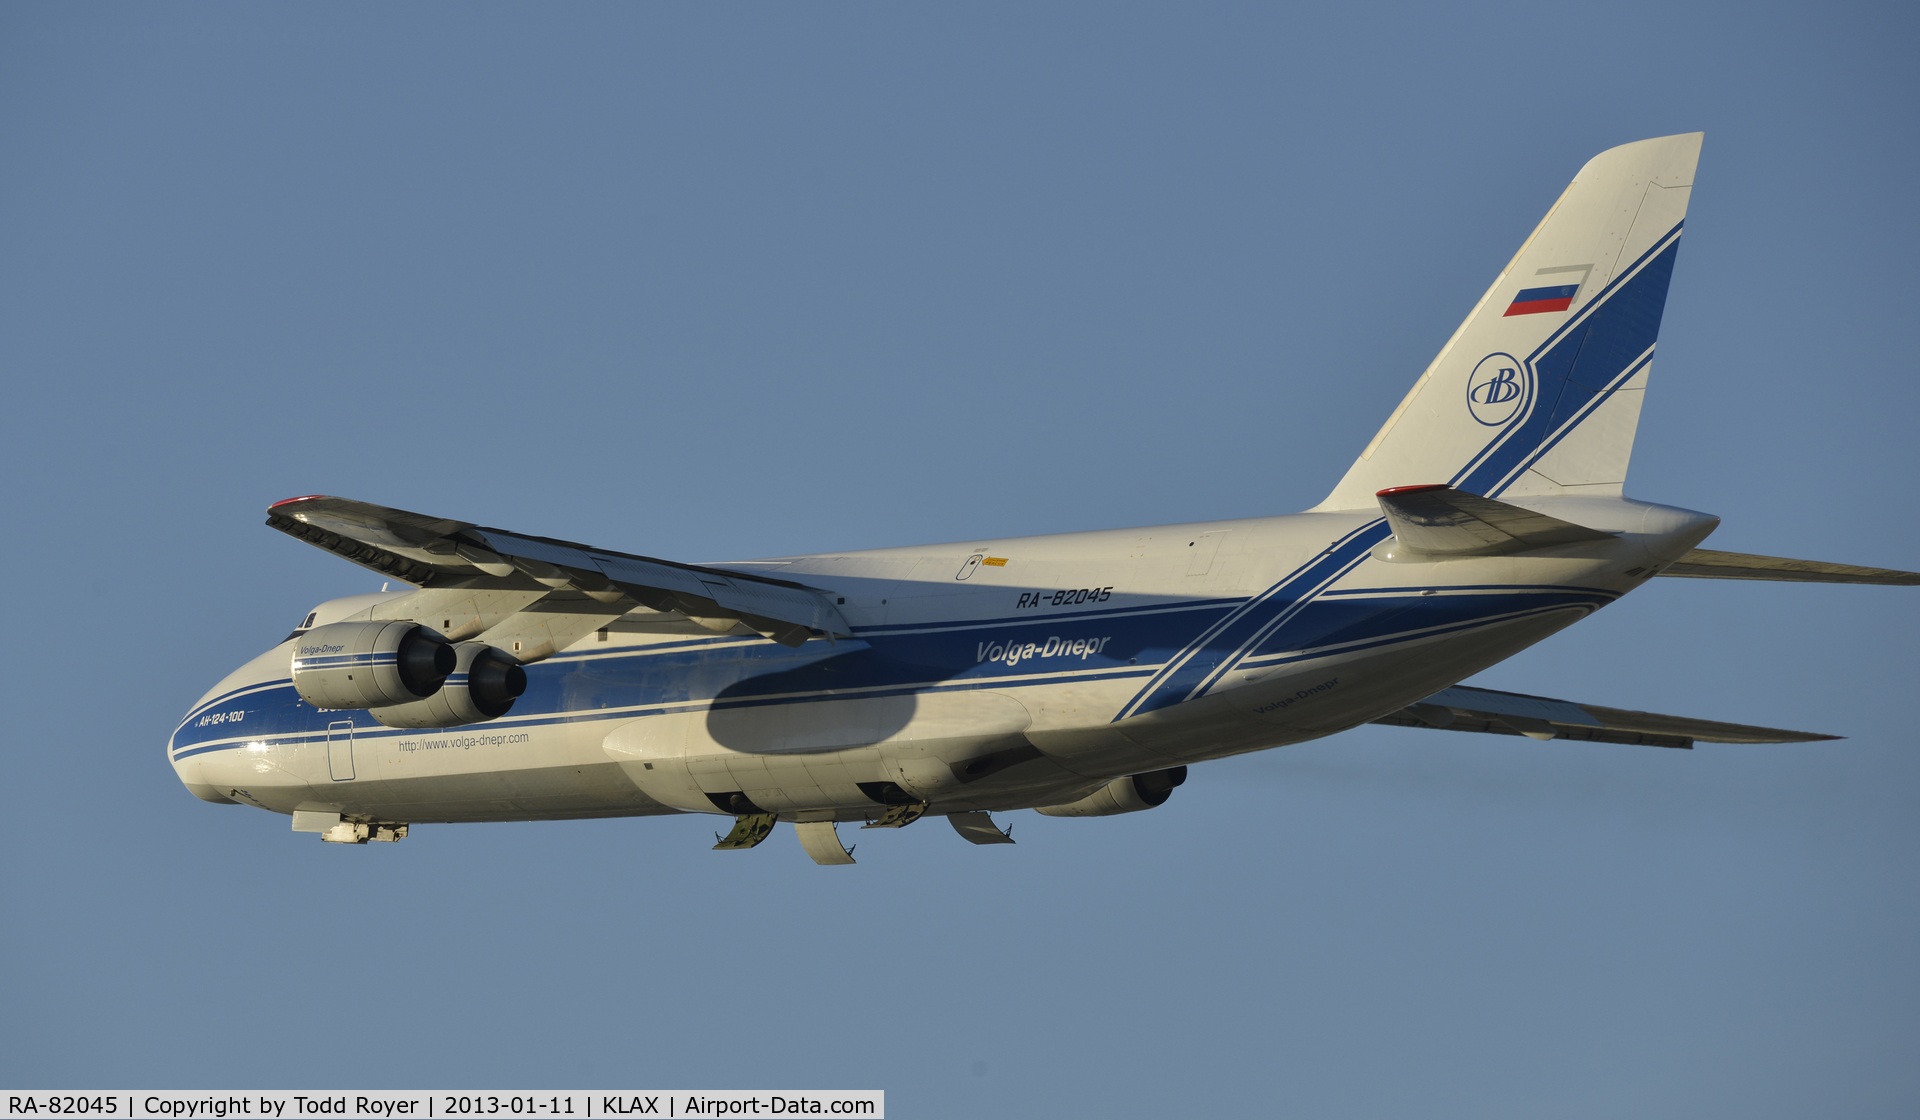 RA-82045, 1991 Antonov An-124-100 Ruslan C/N 9773052255113, Departing LAX